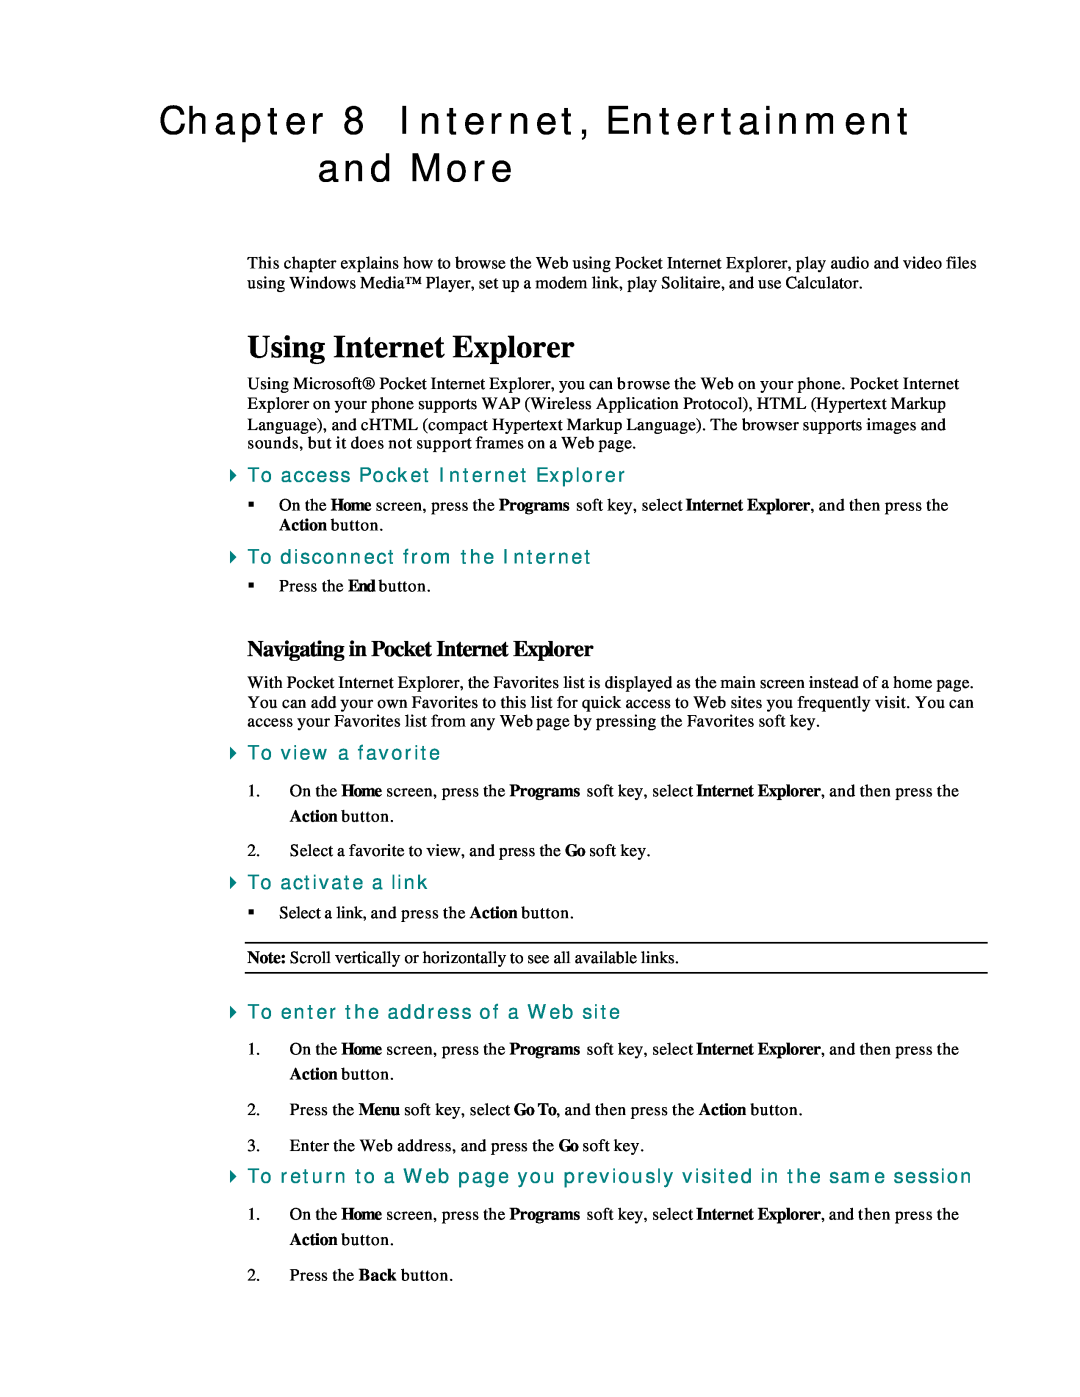 Microsoft Smartphone 2002 Internet, Entertainment and More, Using Internet Explorer, To access Pocket Internet Explorer 